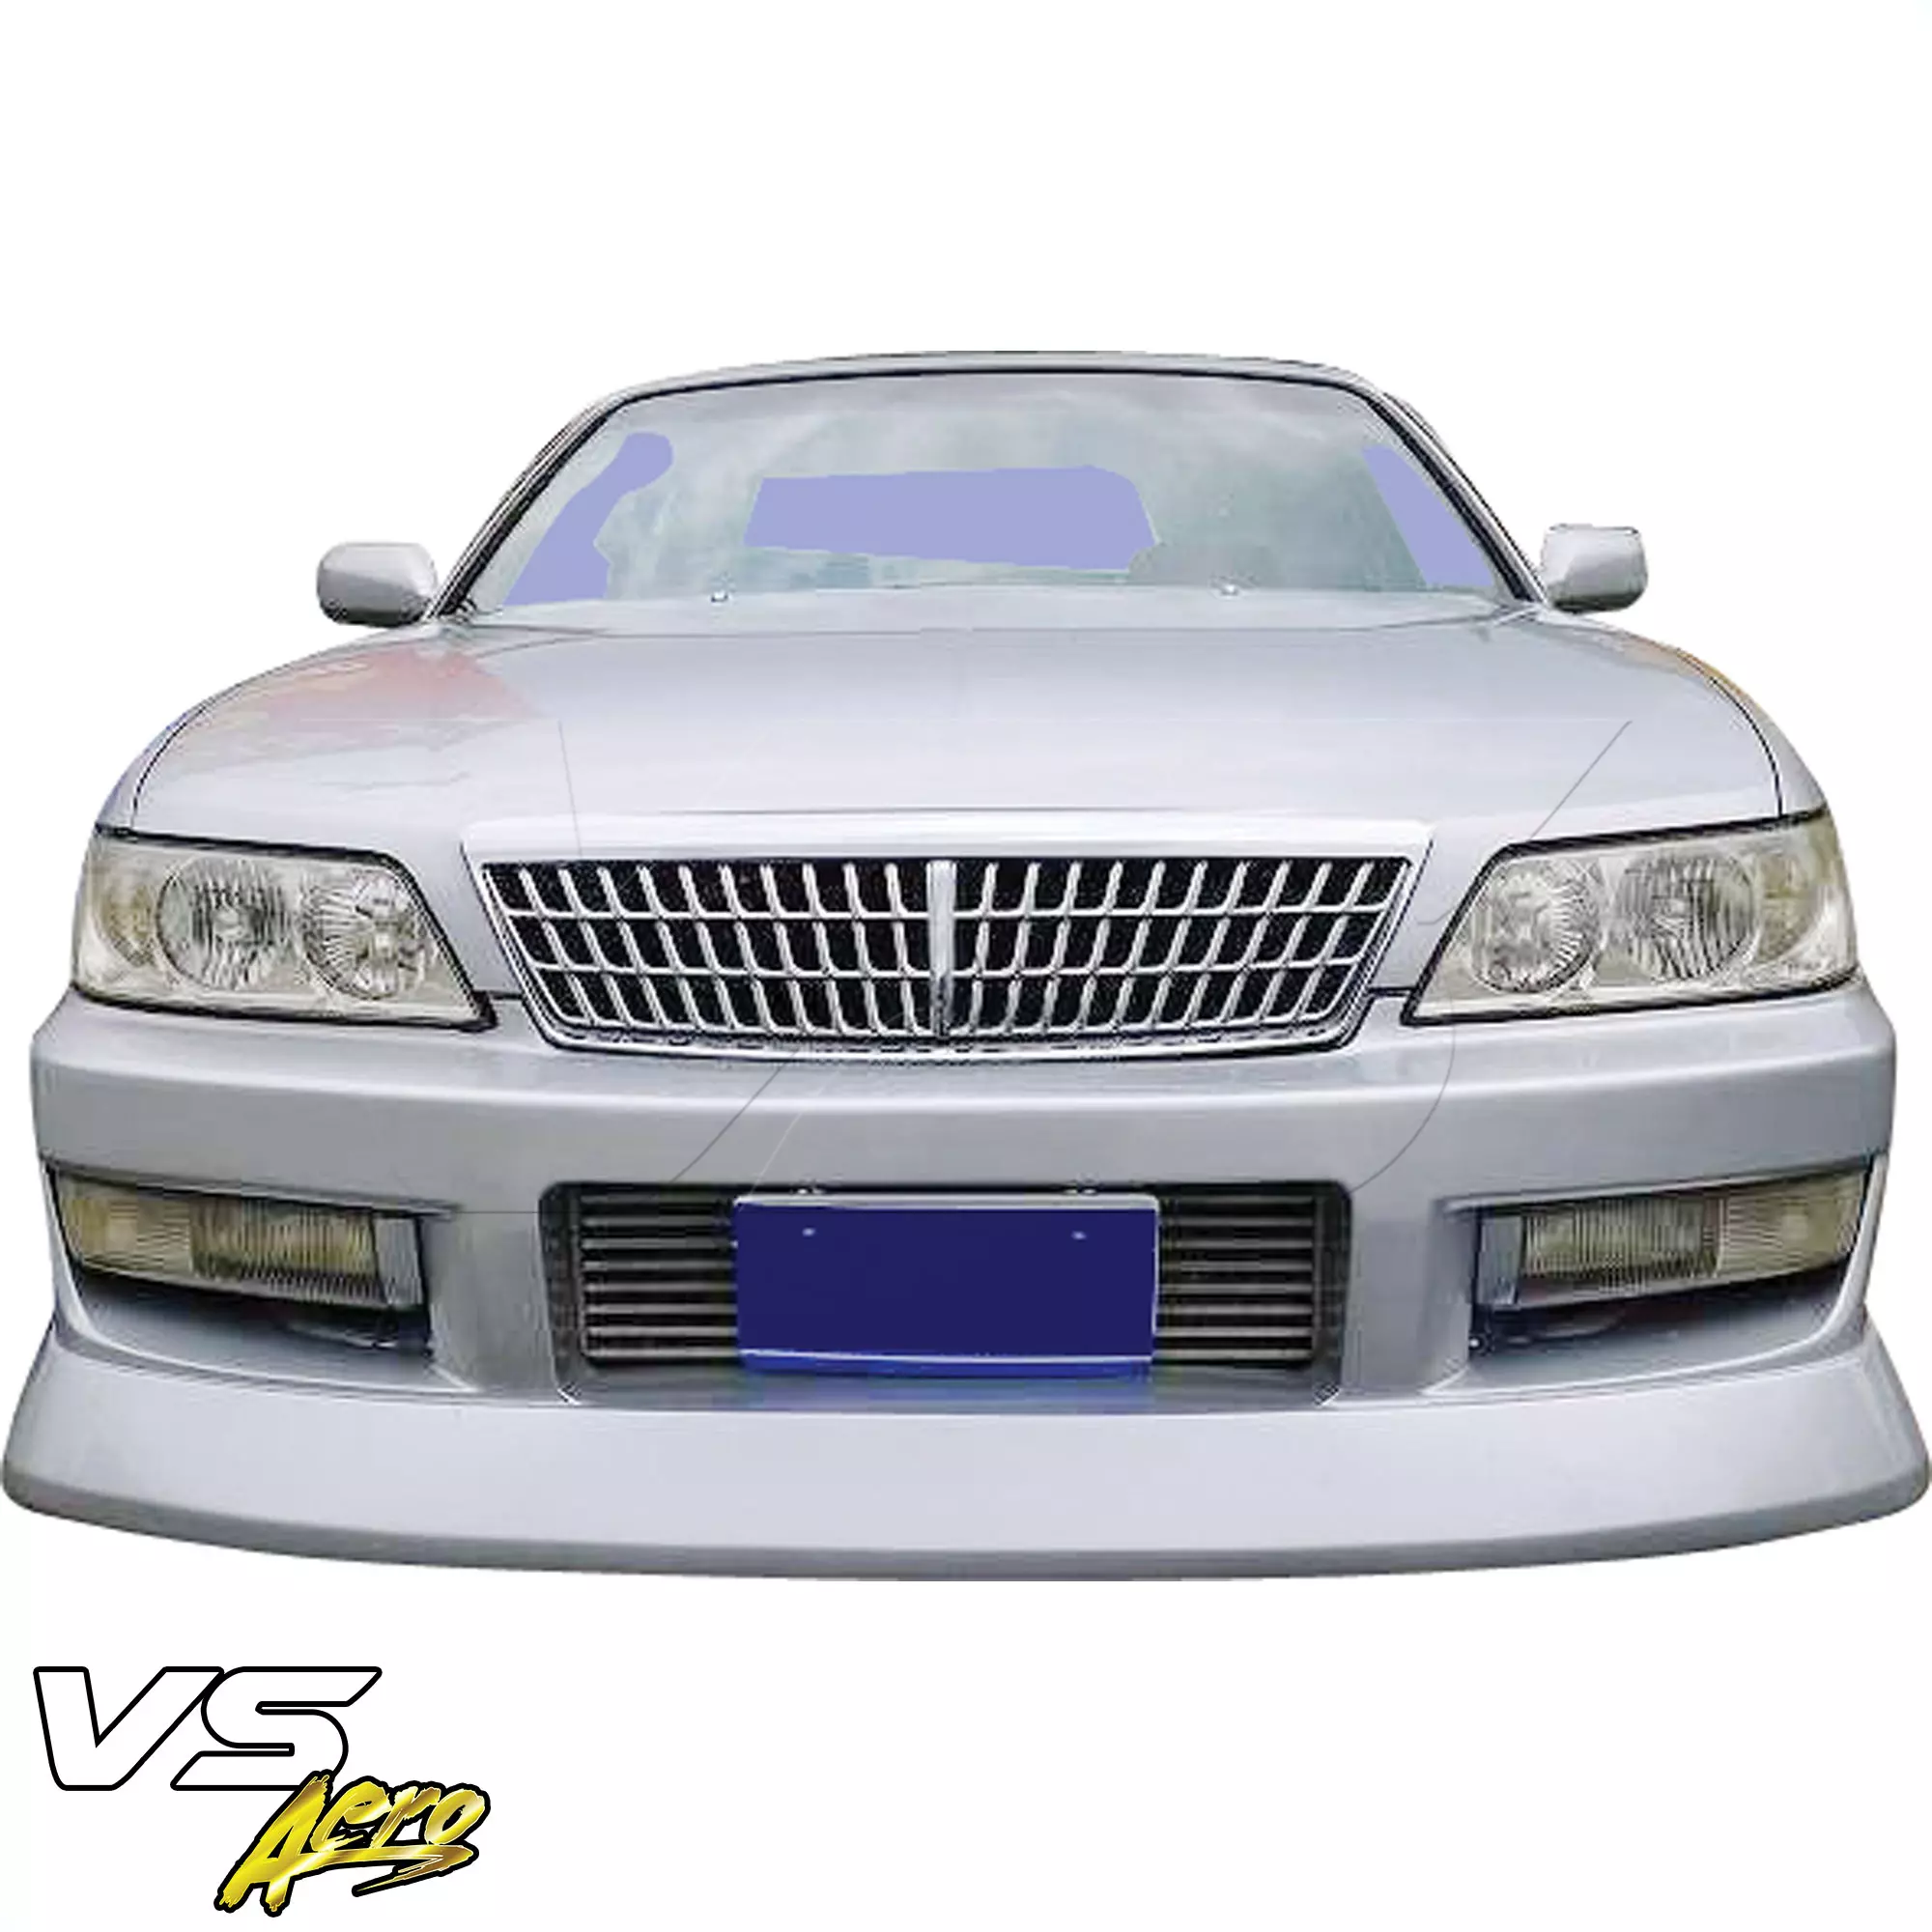 VSaero FRP FKON Front Bumper (early model) > Nissan Laurel C35 1998-2002 - Image 8